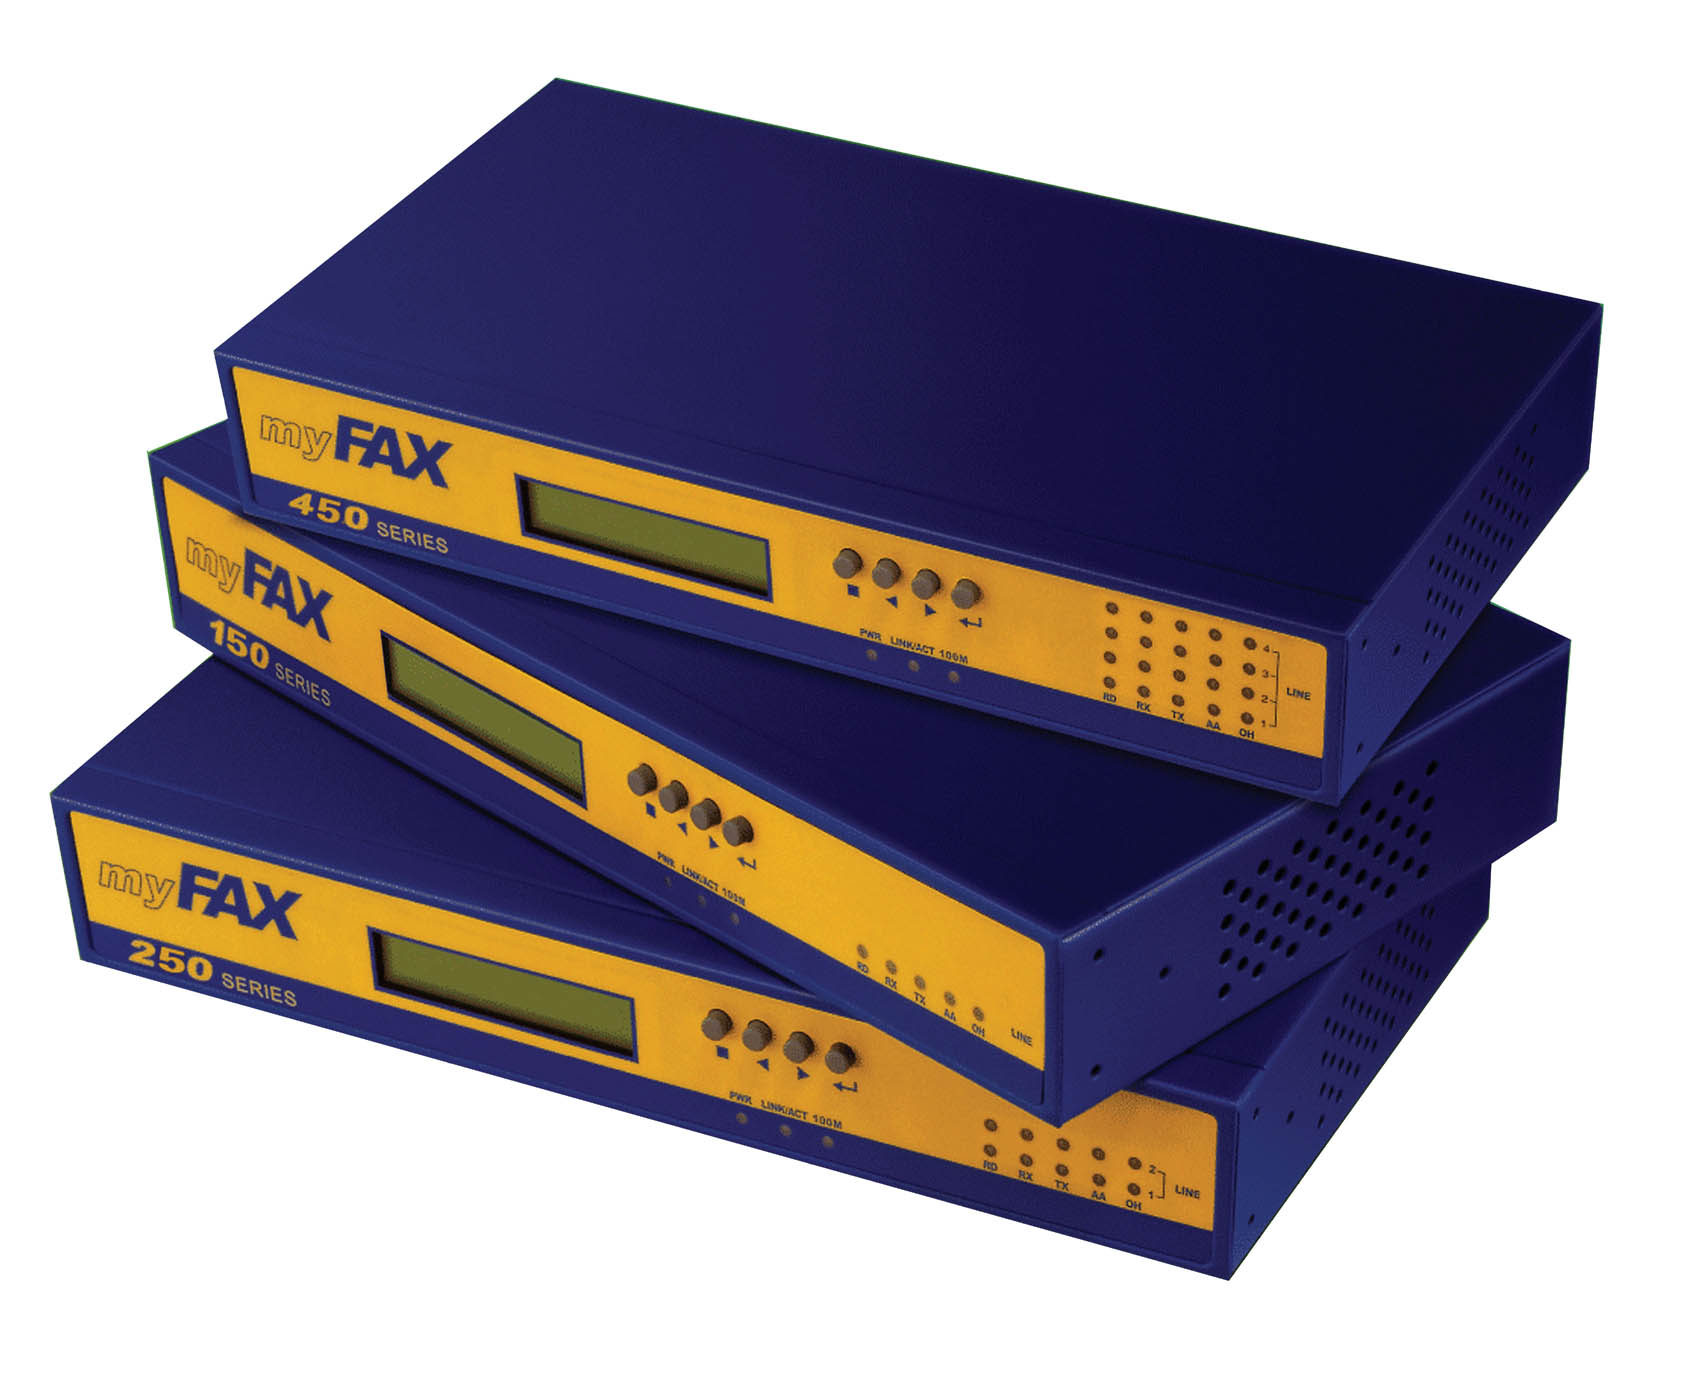 Fax+server+hardware